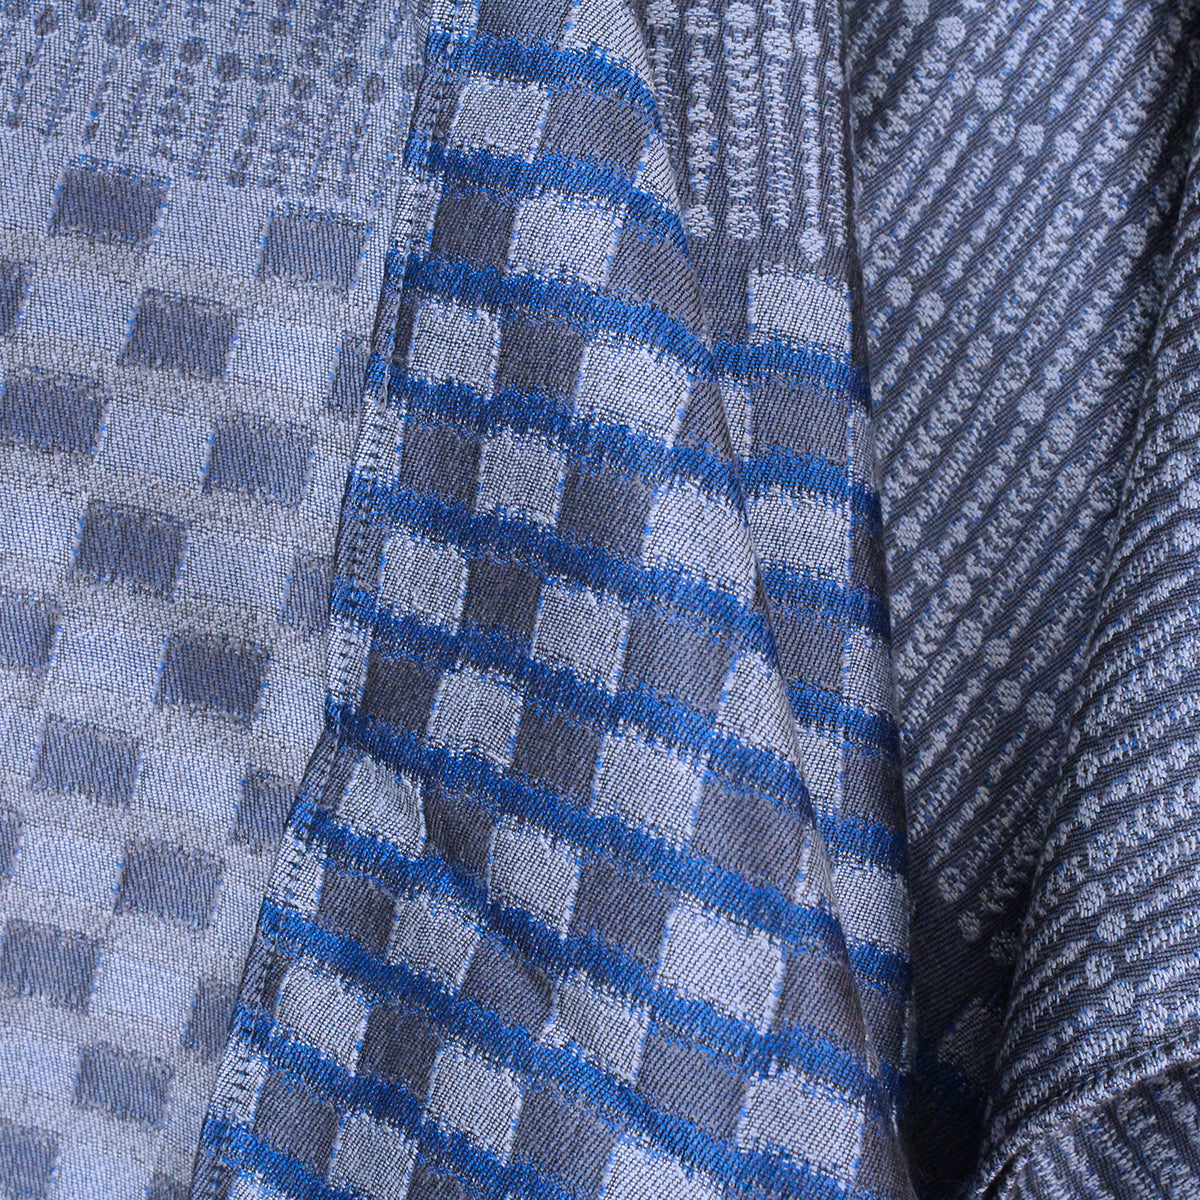 foulard écharpe en soie homme 927 fabriqué en France Made in